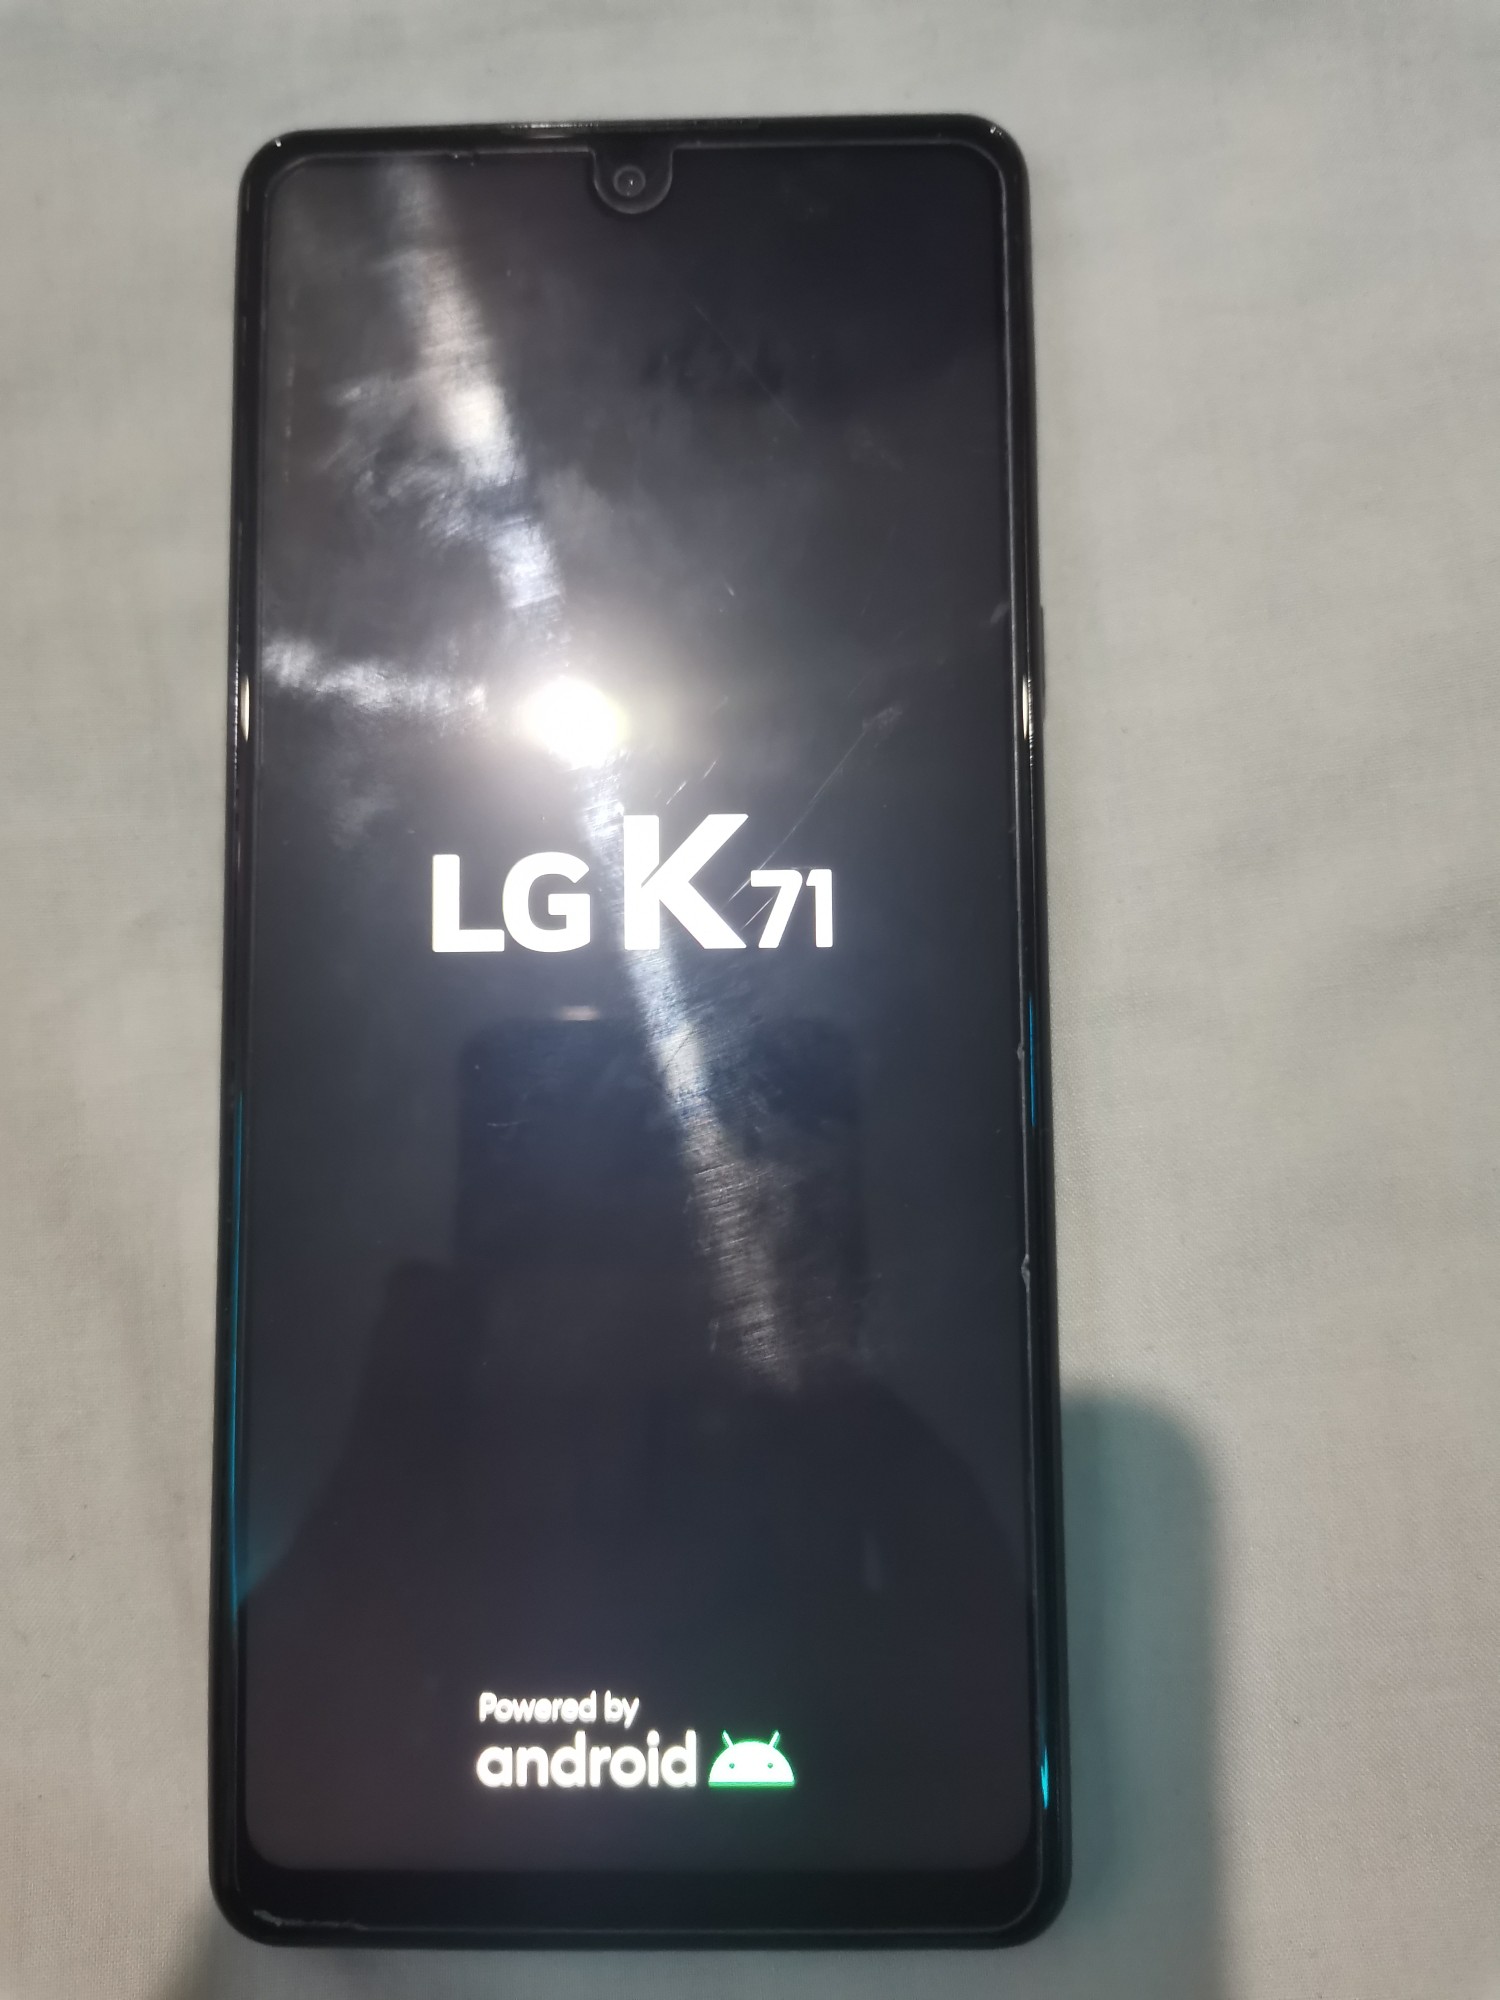 celulares y tabletas - LG K71